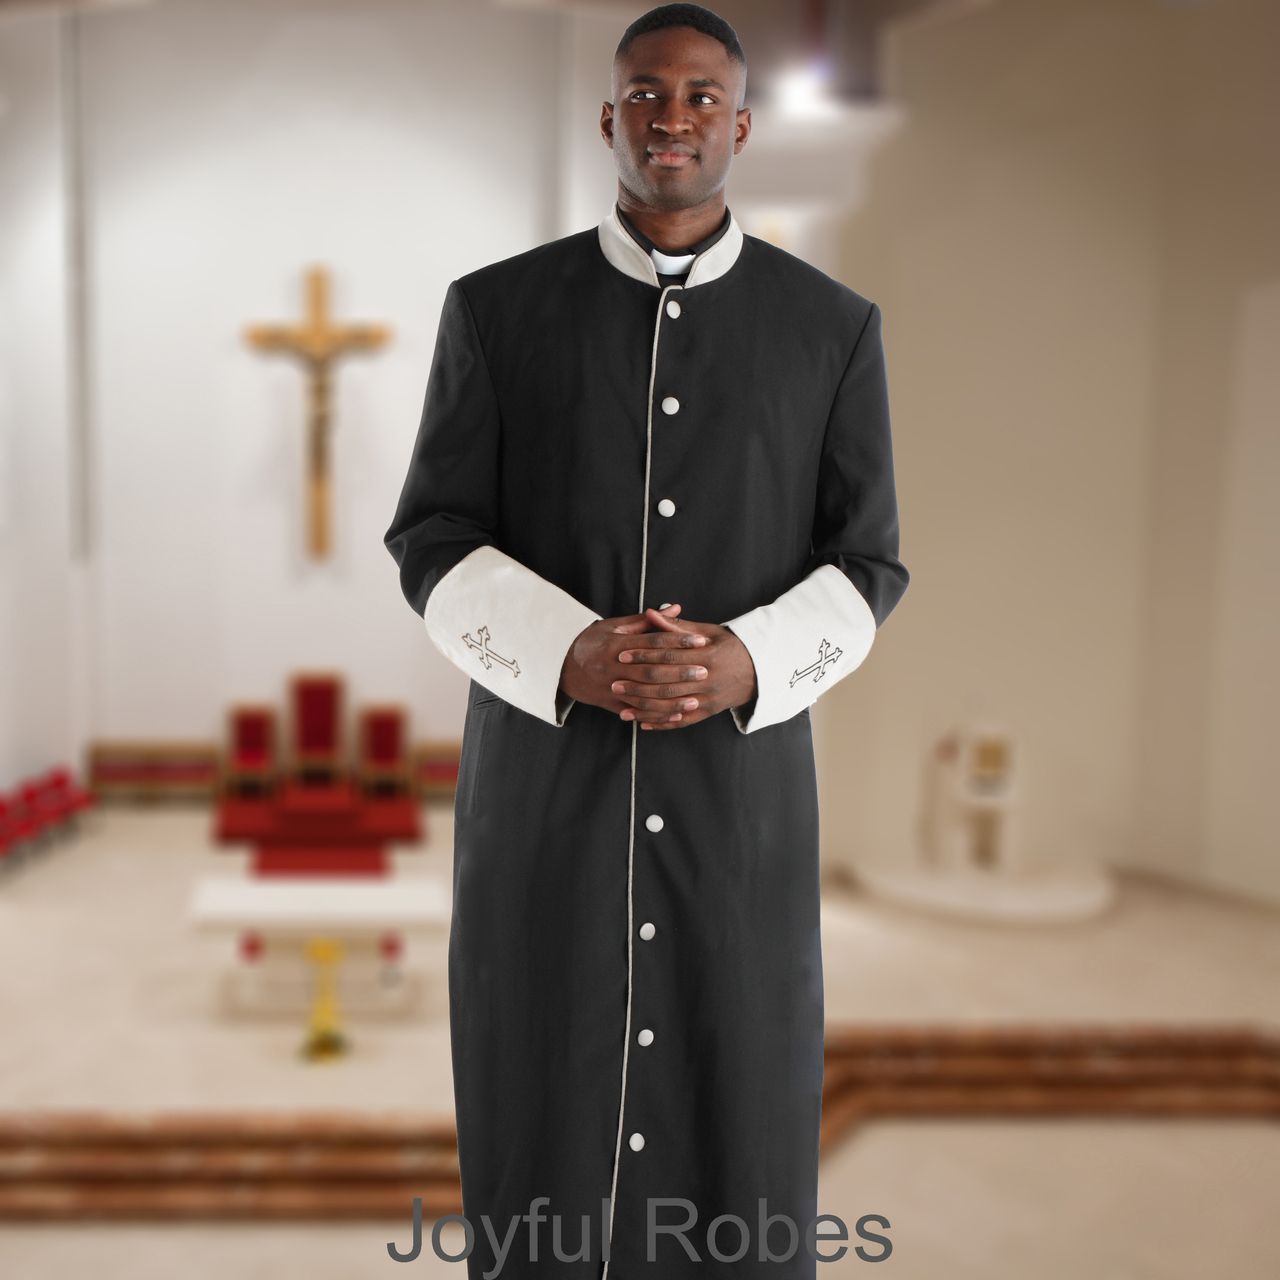 305 M. Men's Pastor/Clergy Robe - Black/White Cuff